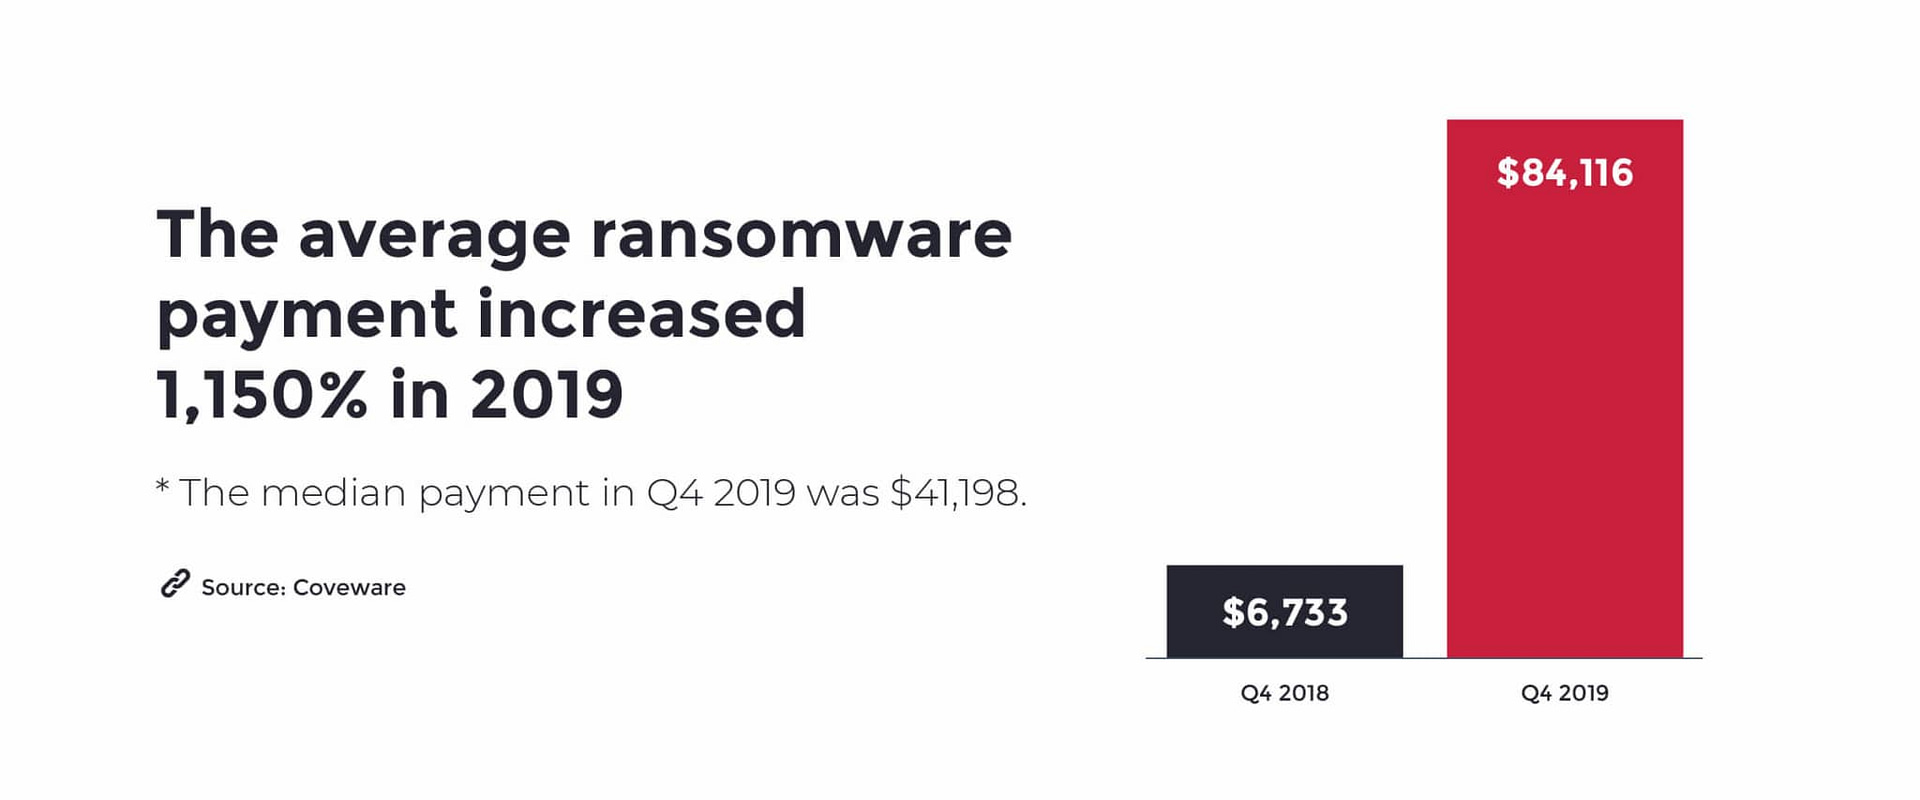 demande moyenne des ransomware en 2019